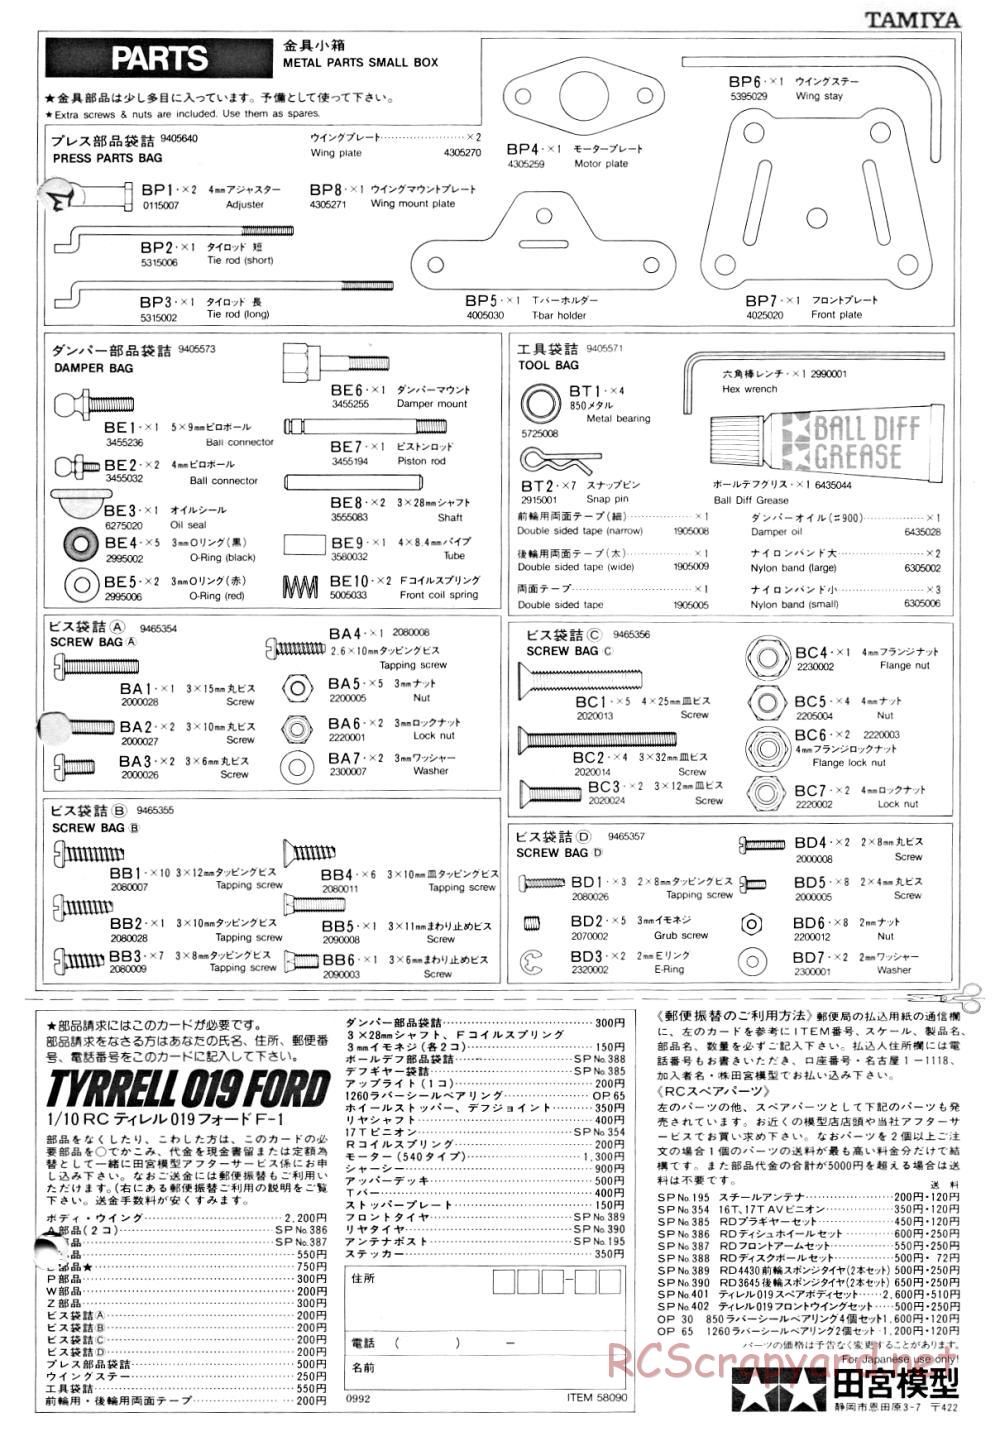 Tamiya - Tyrrell 019 Ford - 58090 - Manual - Page 18